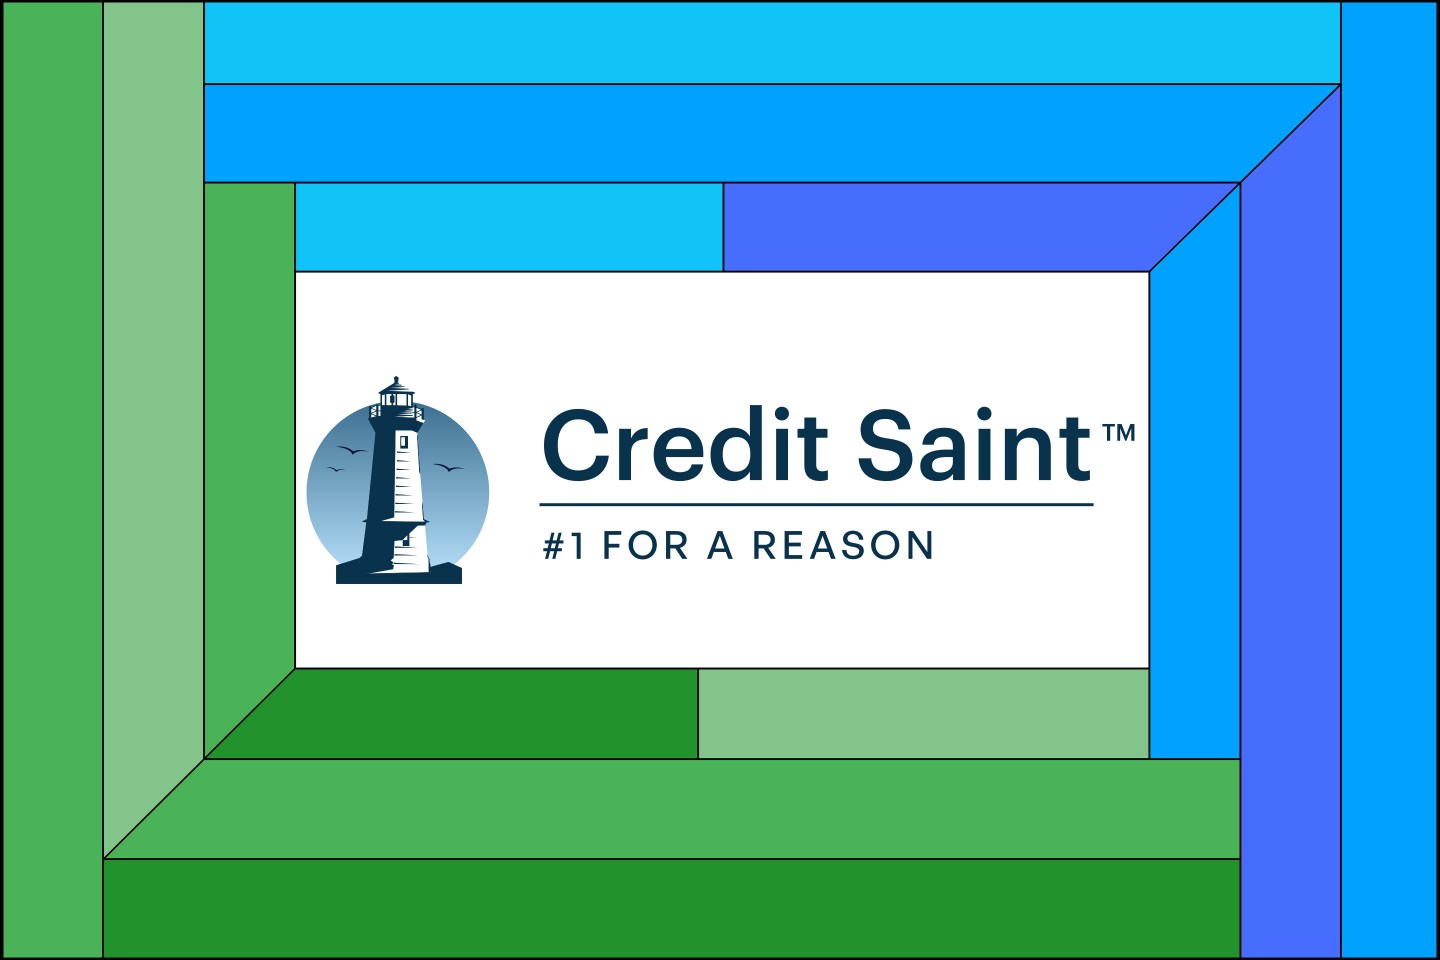 Illustration of the Credit Saint logo inside a blue and green frame.